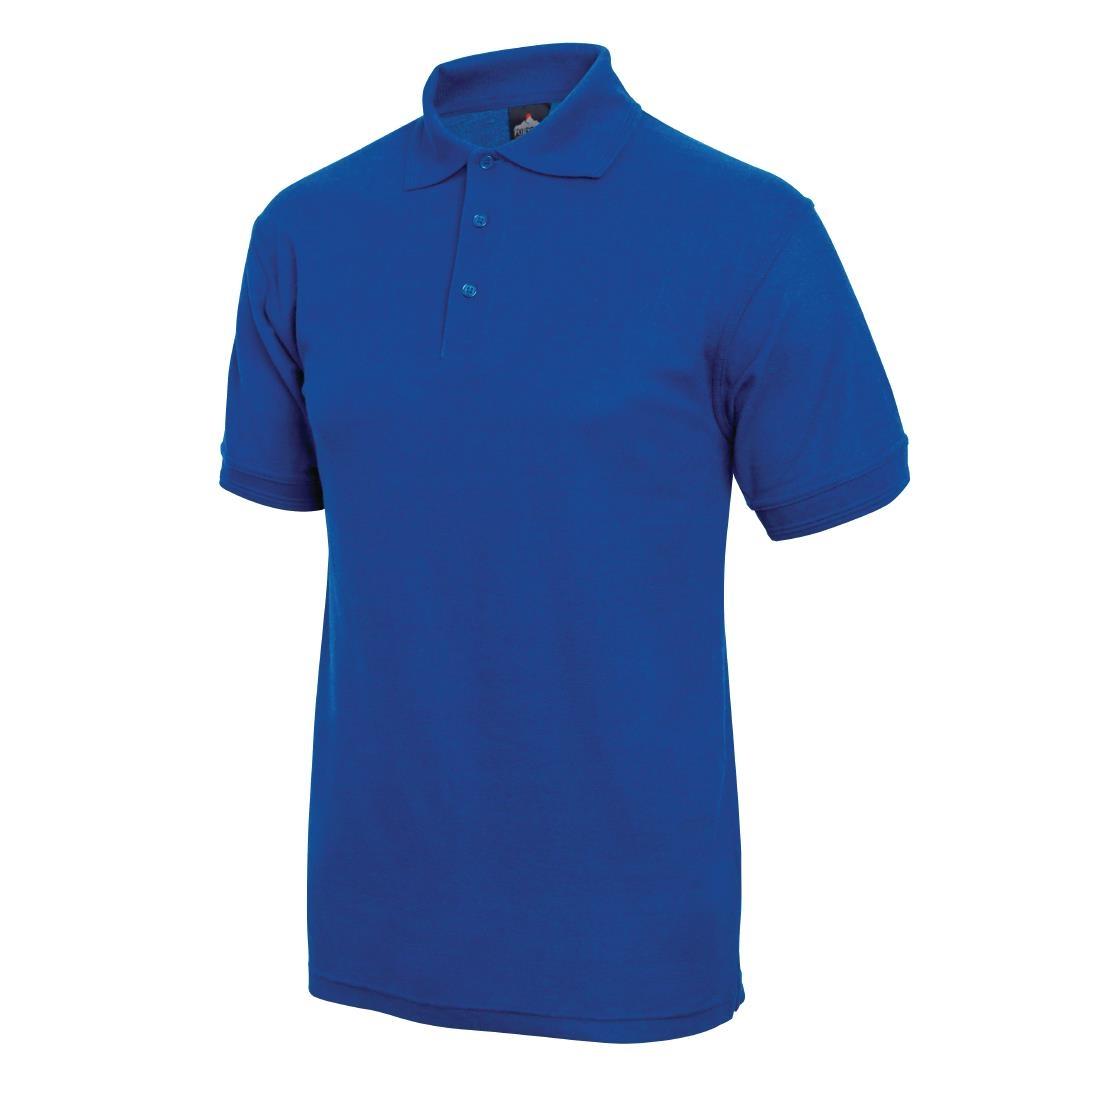 Unisex Polo Shirt Royal Blue M - A763-M  - 2